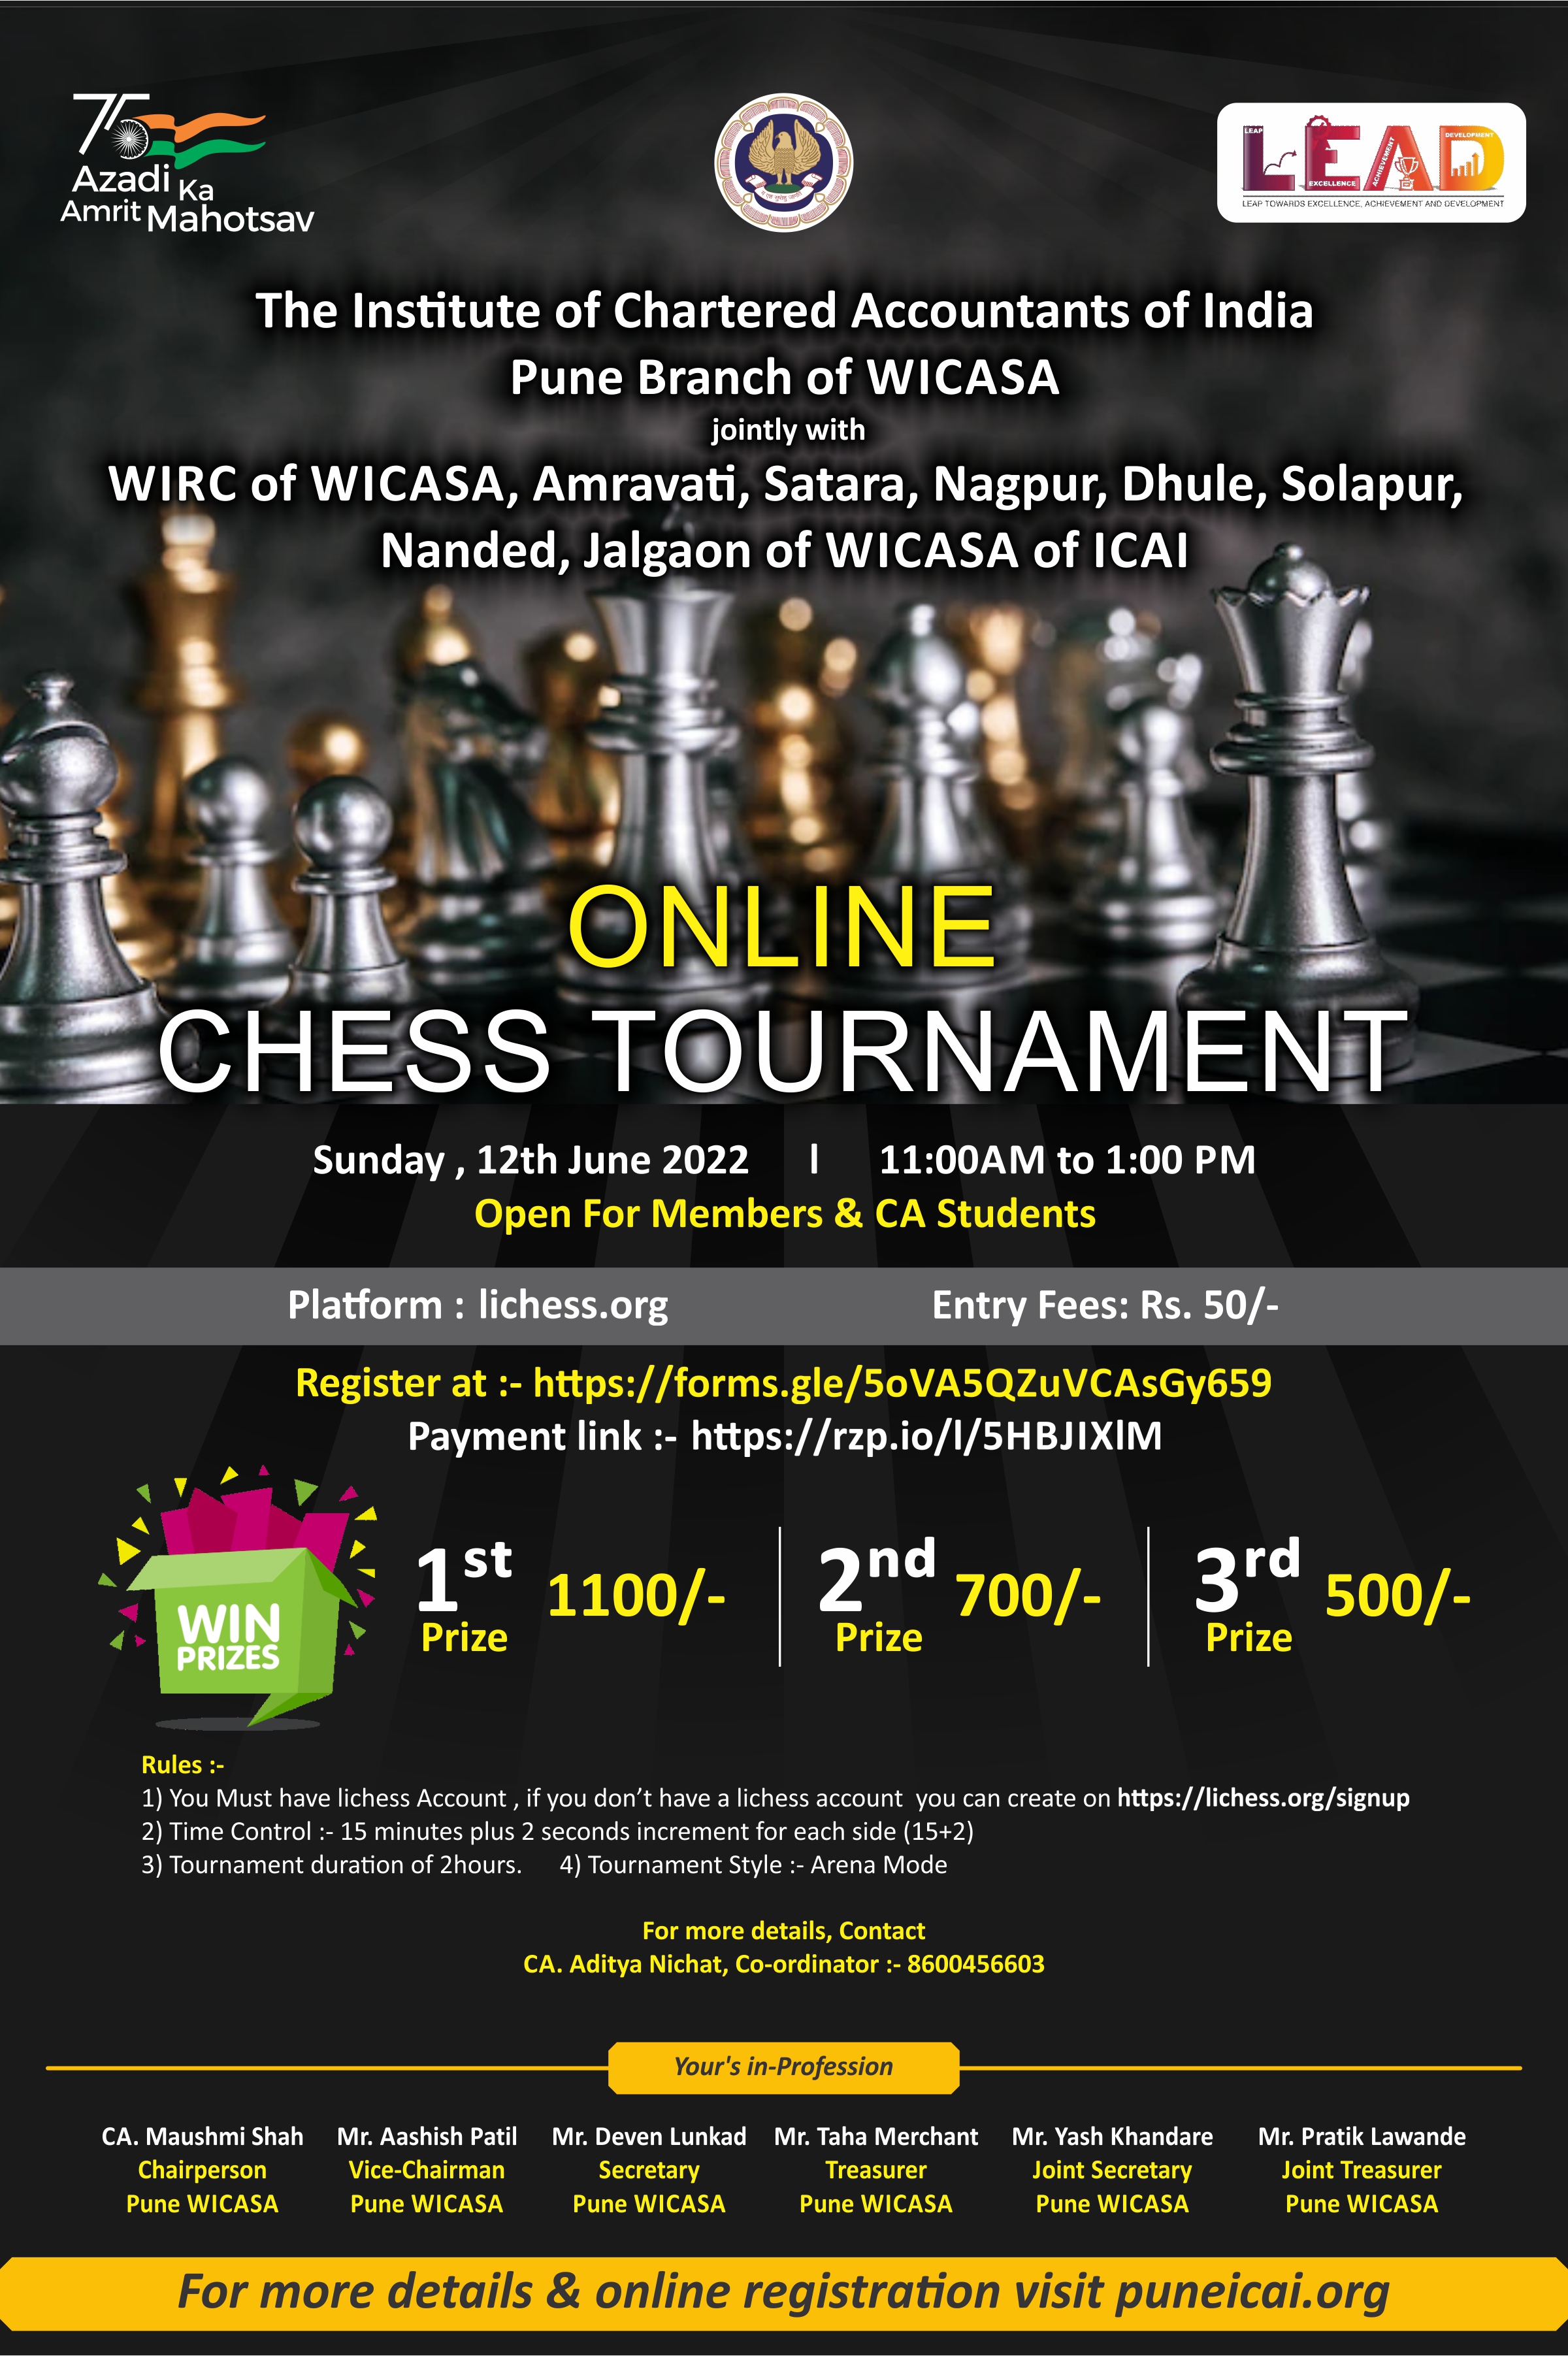 Online tournaments on Lichess.org